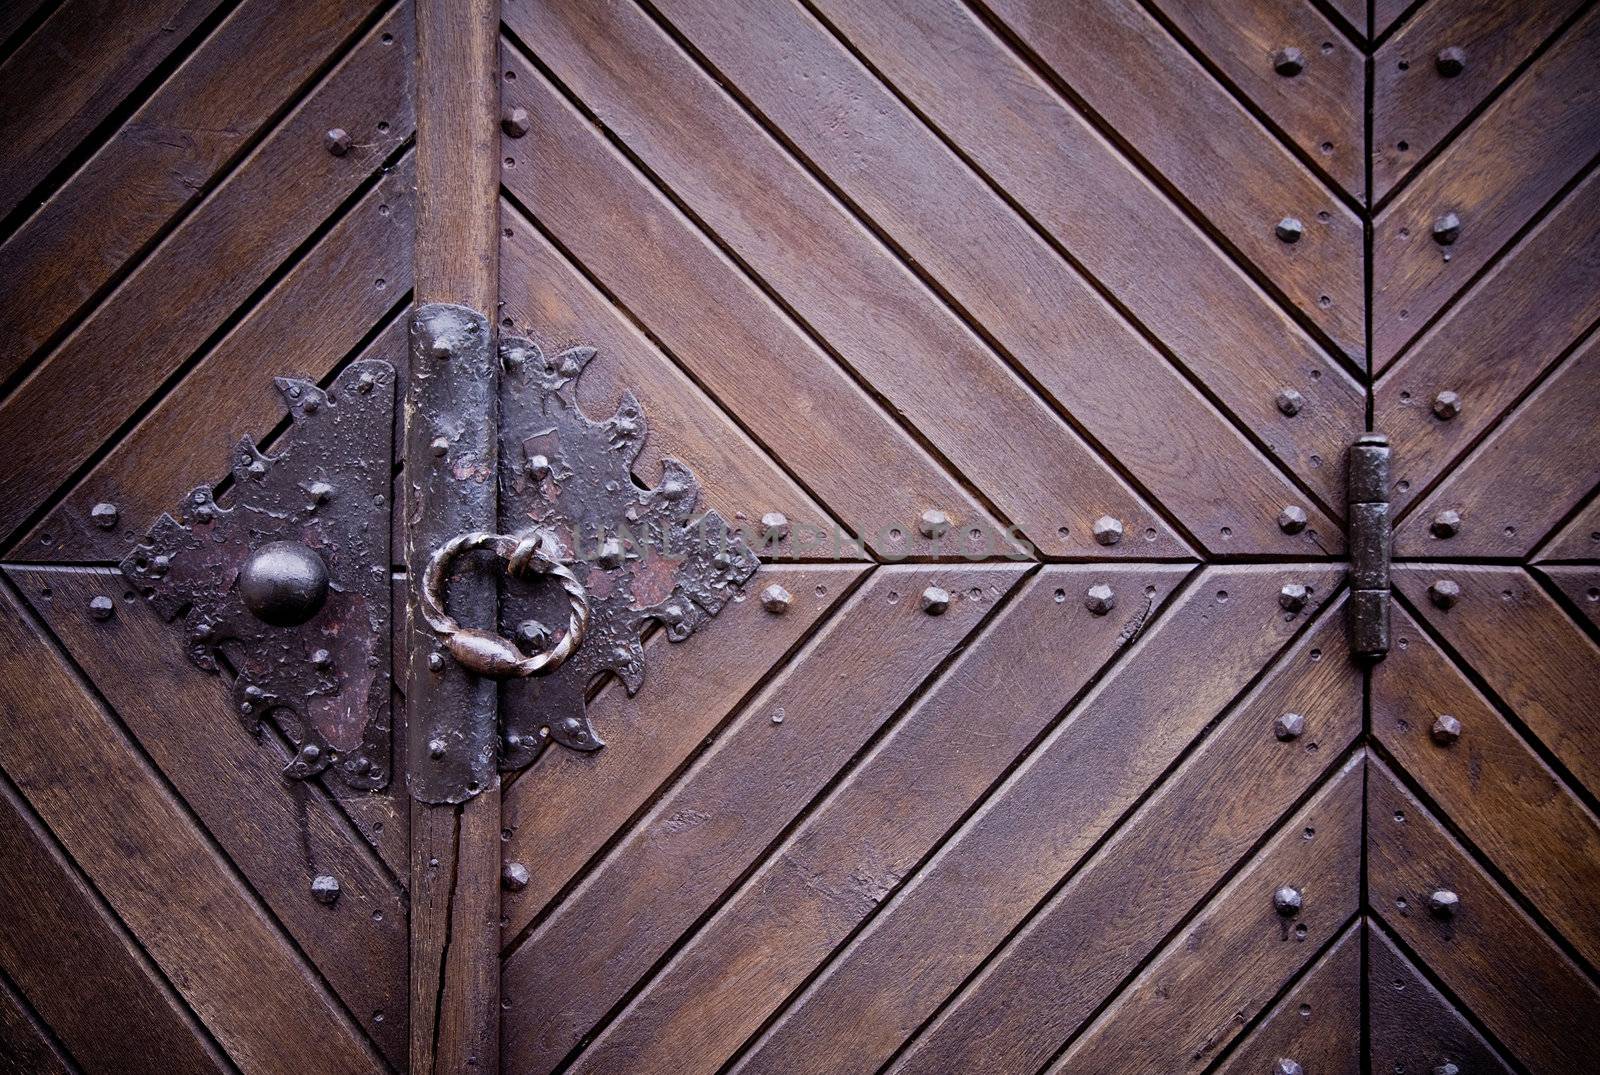 Steel medieval knocker on the old wooden historic door, hinge